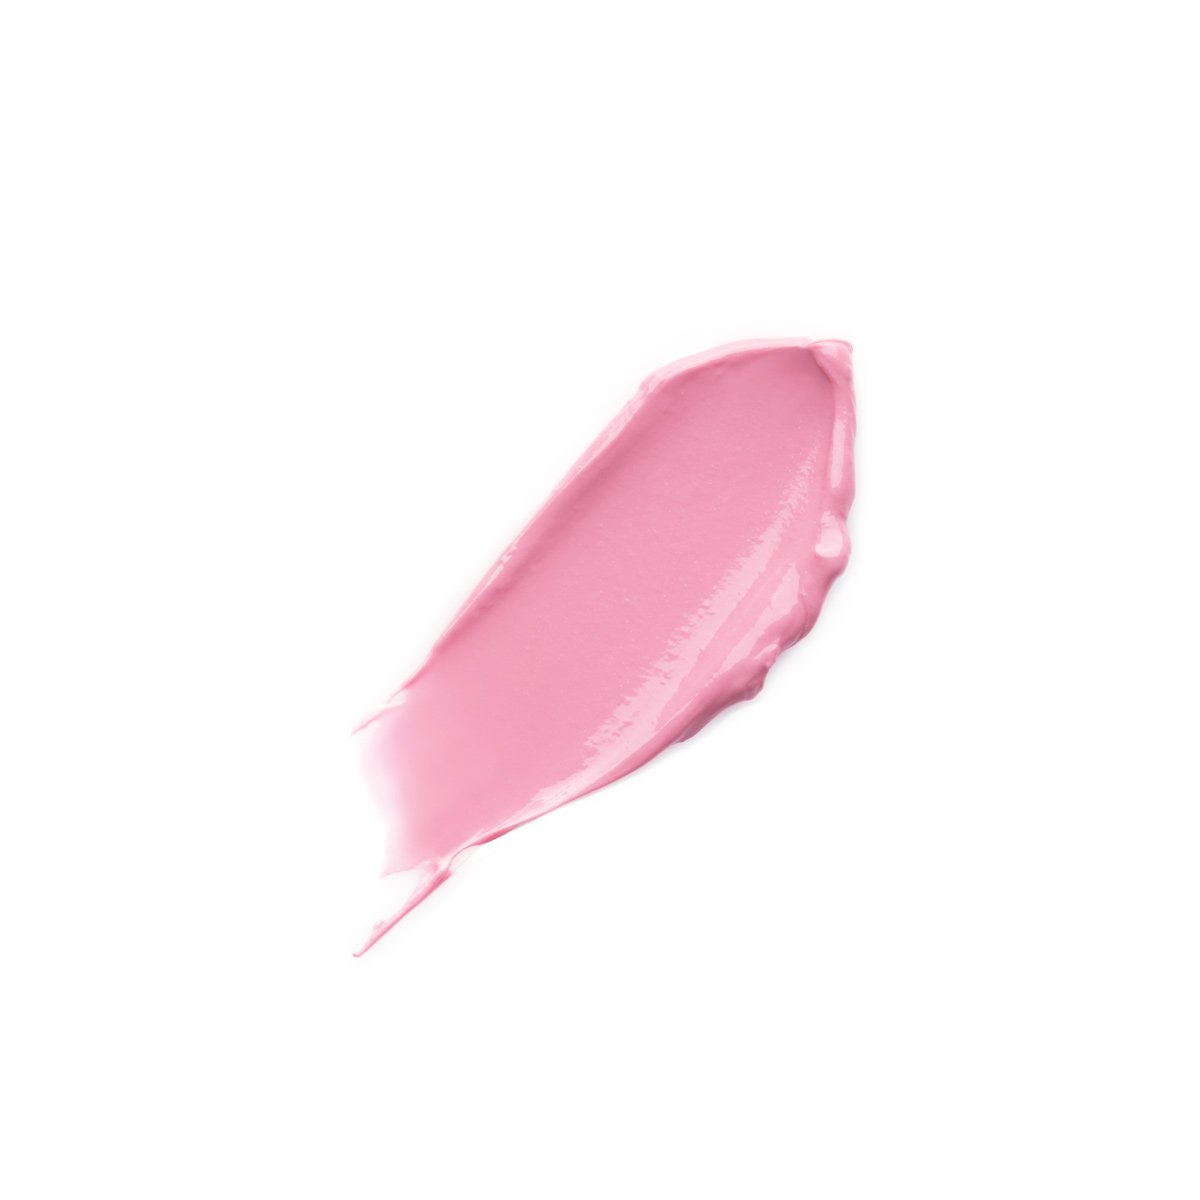 BON BON - SHEER BABY PINK - sheer baby pink lipstick lip balm